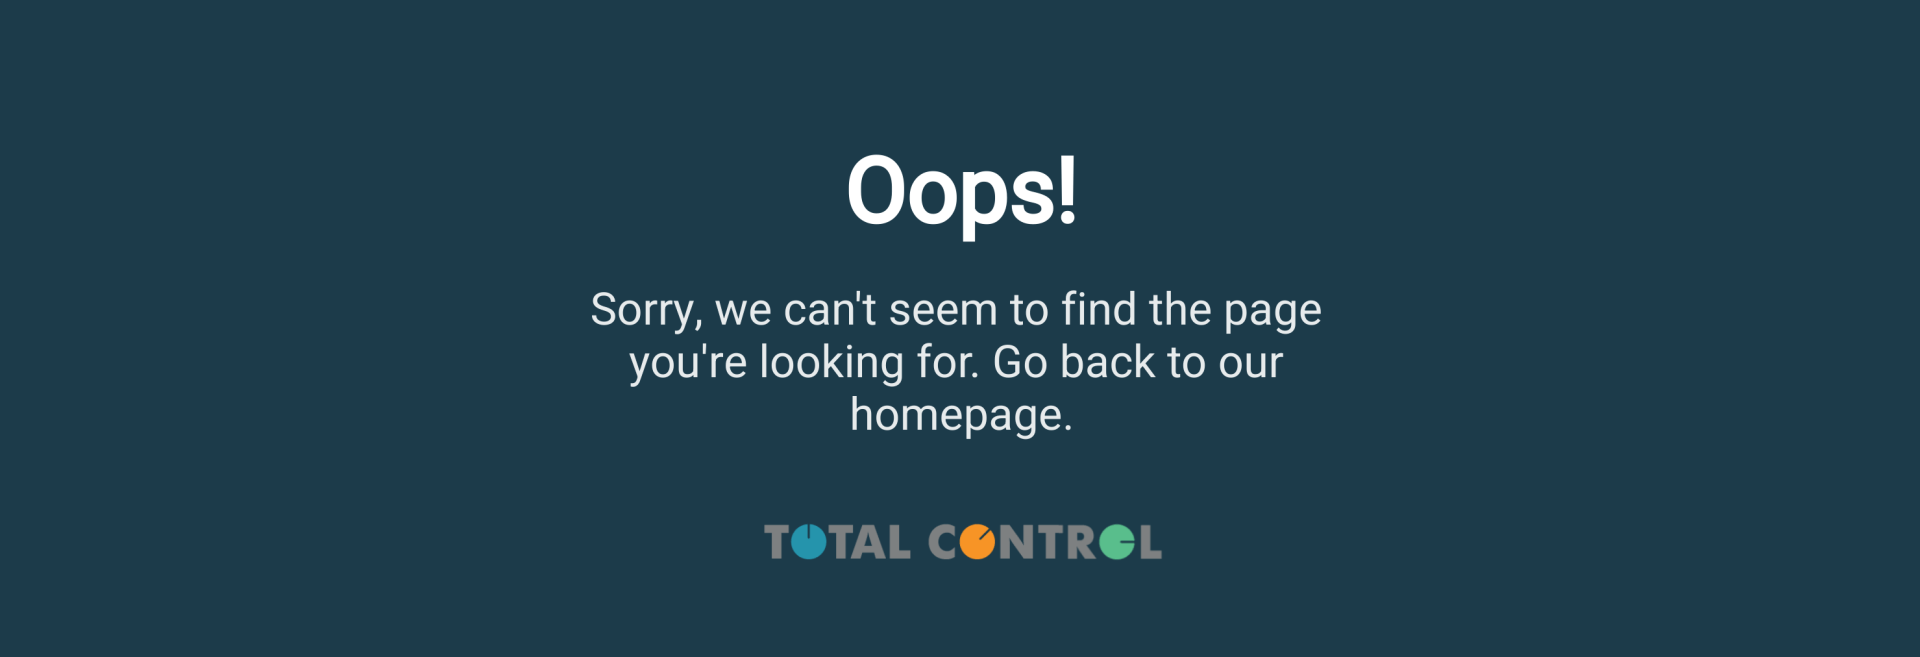 404 Error Page Total Control